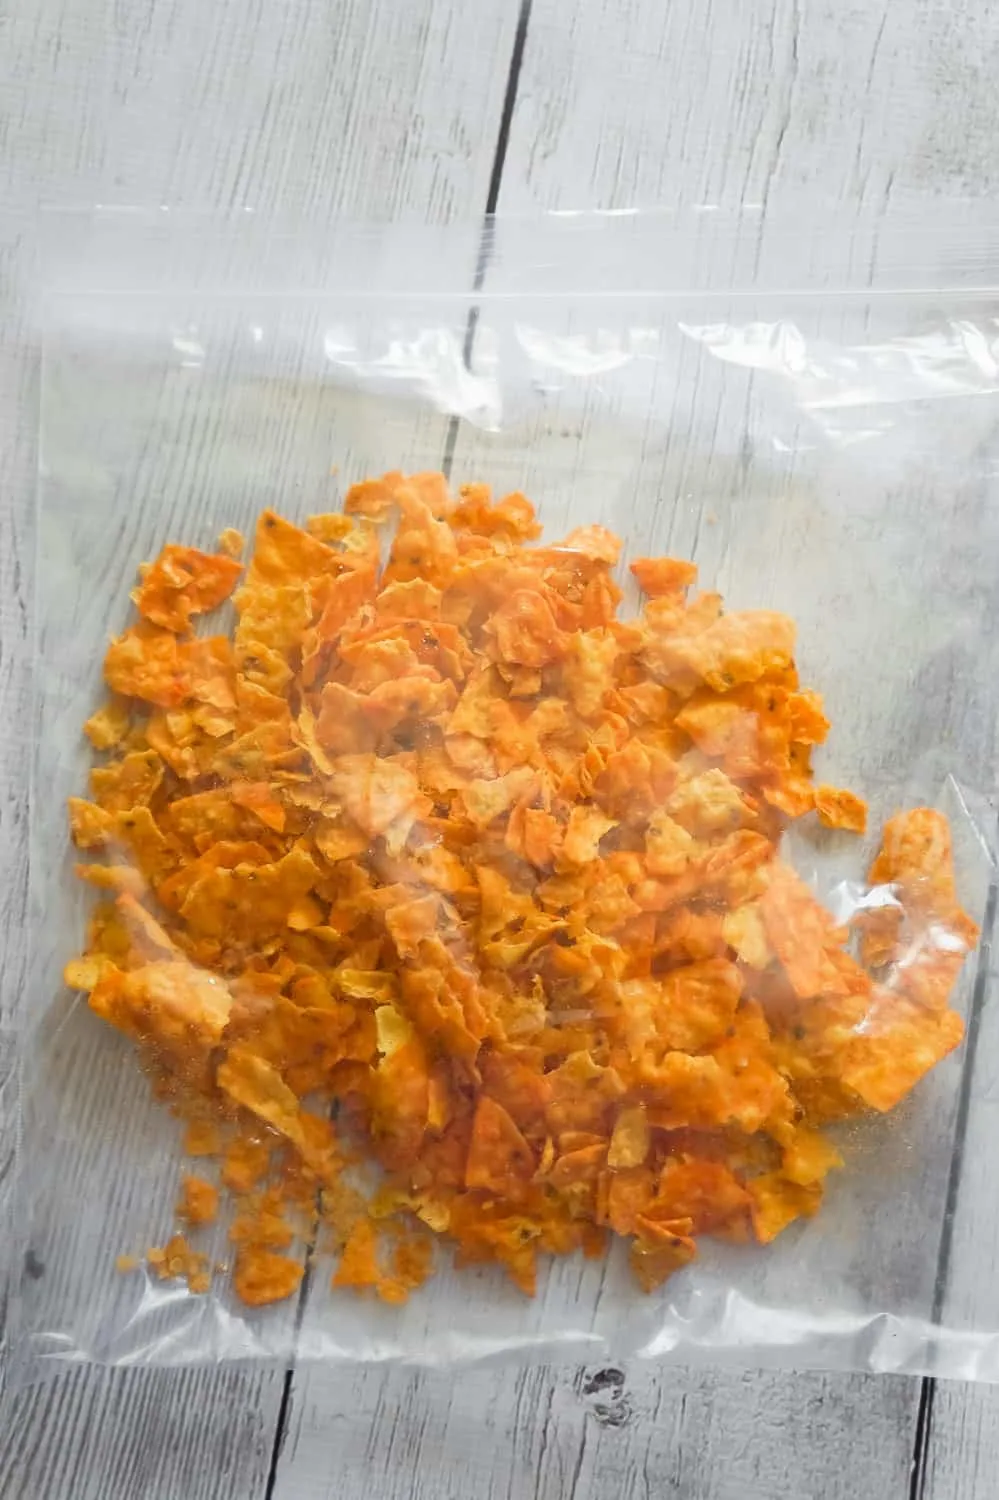 crumbled Doritos in a large Ziploc bag